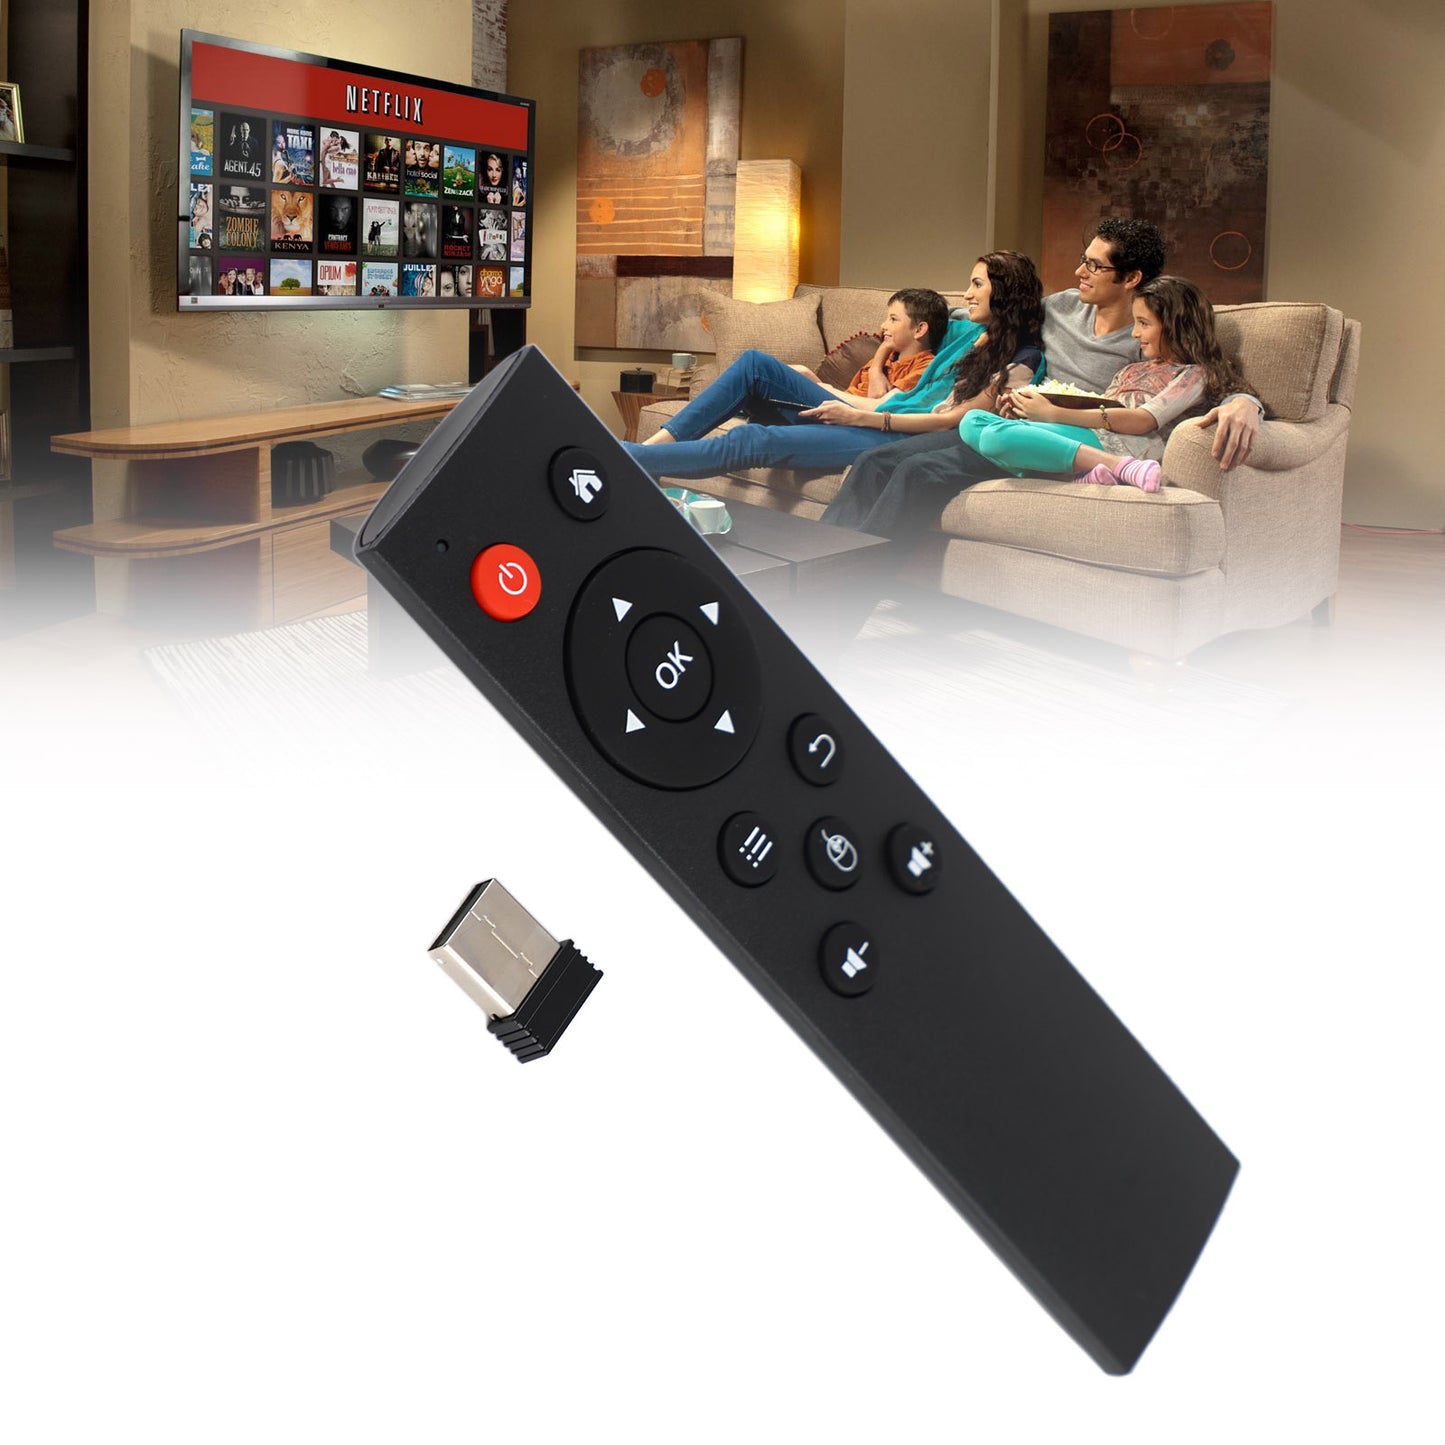 2.4G USB Mini Wireless Remote Fernbedienung Für Android Smart TV Box PC